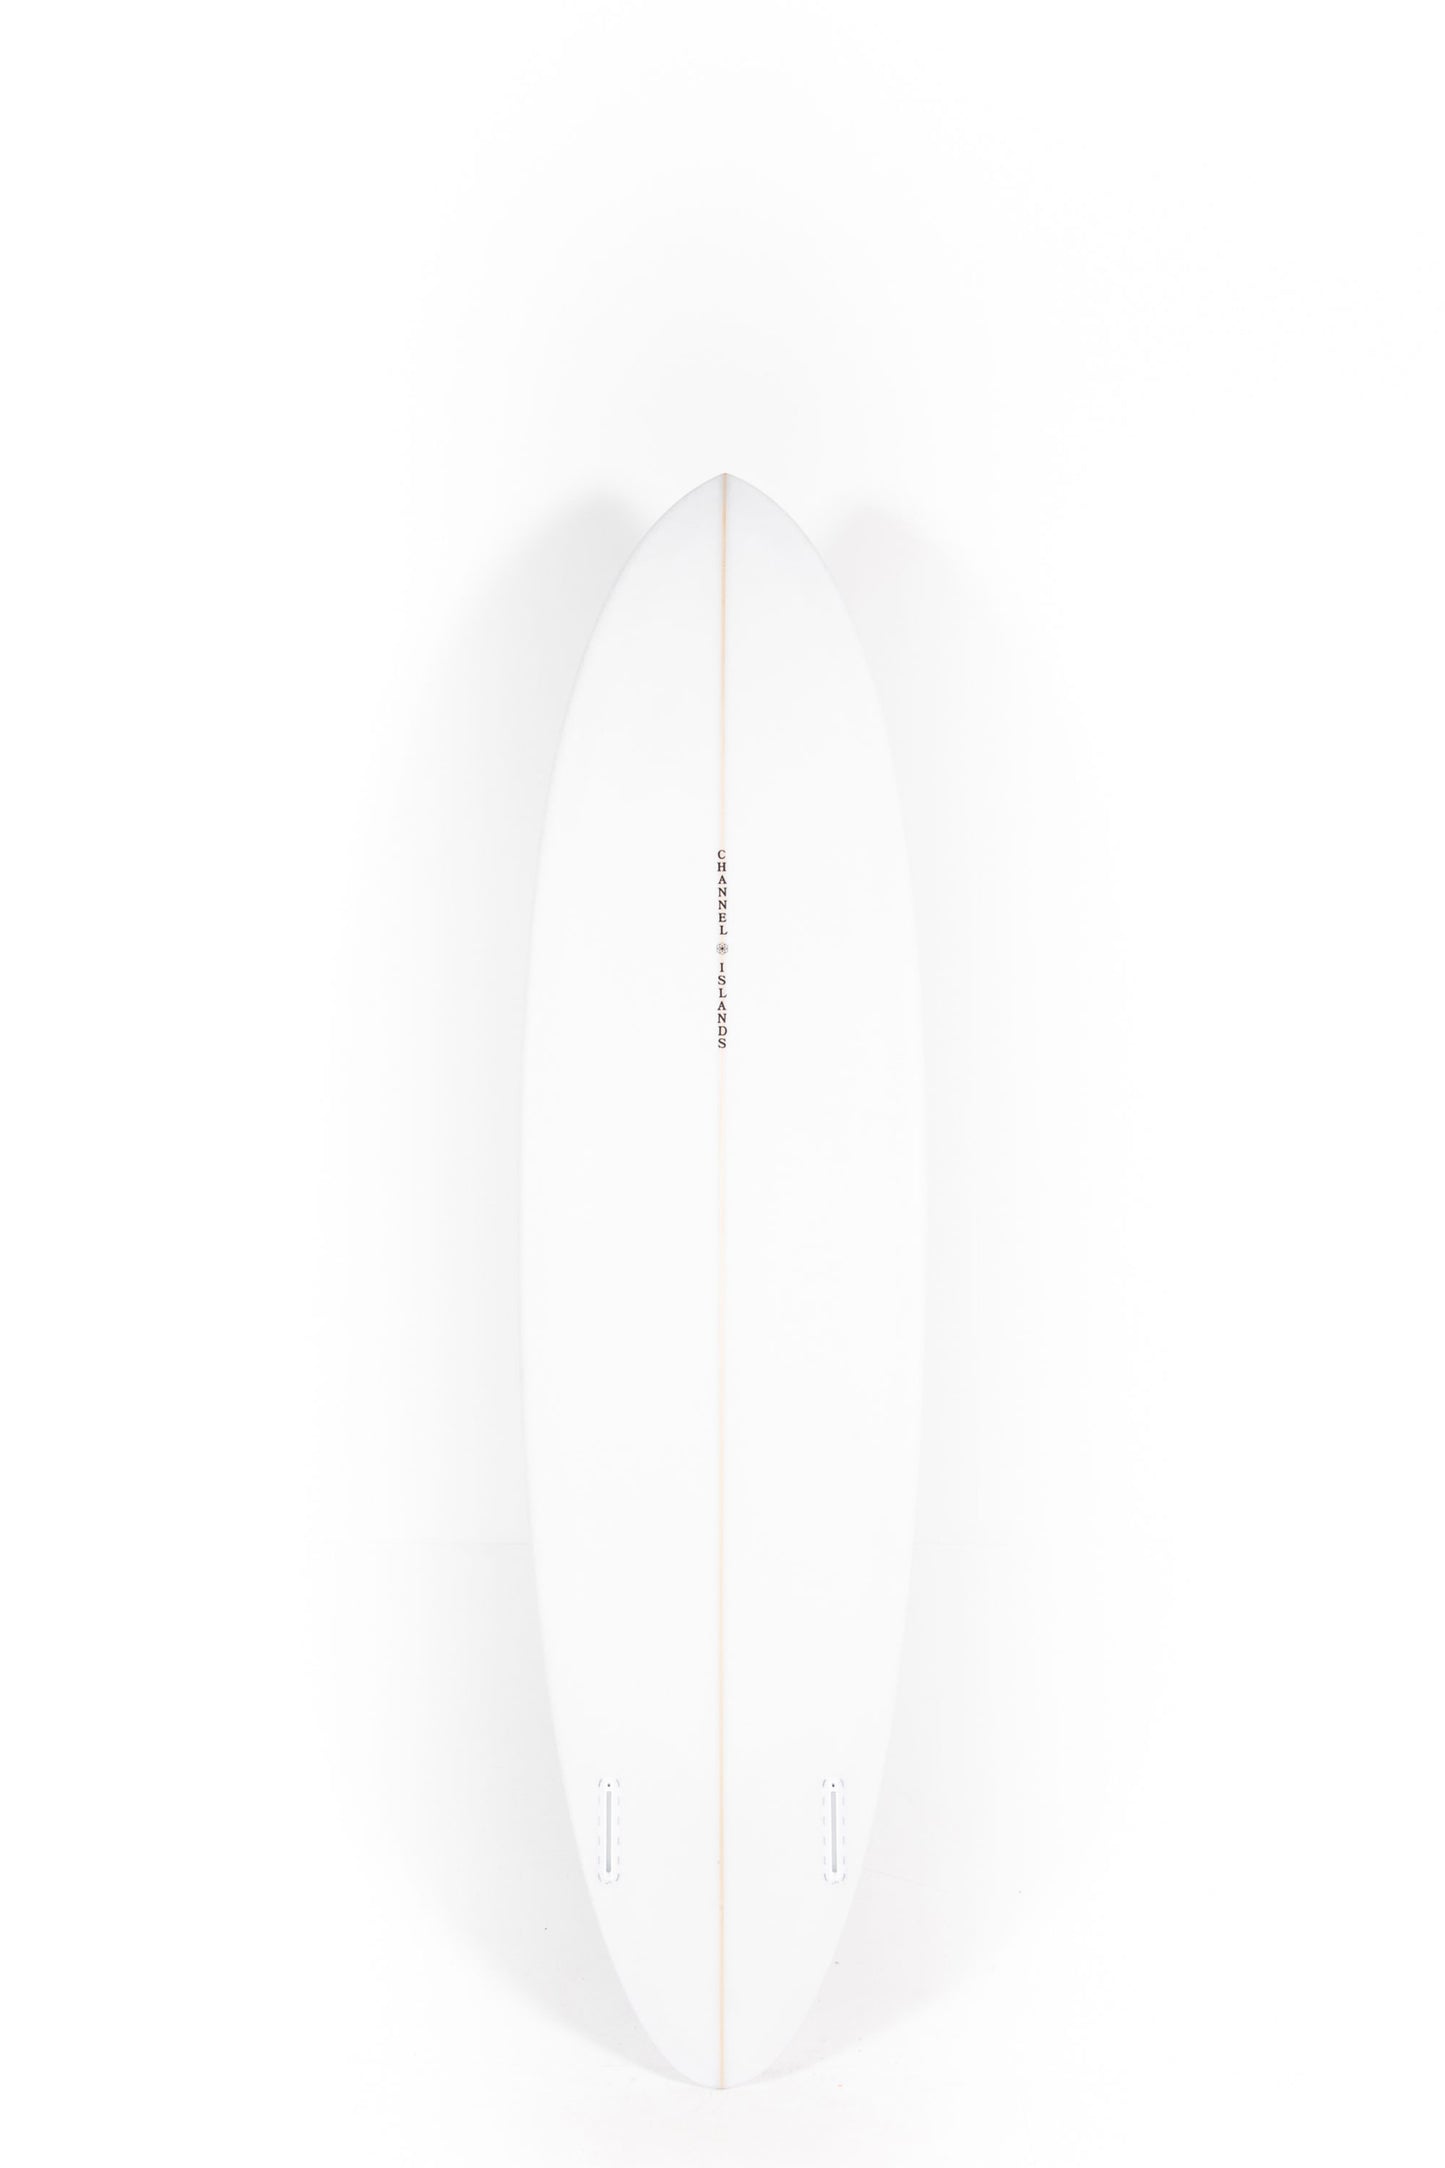 
                  
                    Pukas Surf Shop - Channel Islands - CI MID TWIN - 7'2" x 21 3/8 x 2 7/8 - 48,60L - CI32368
                  
                